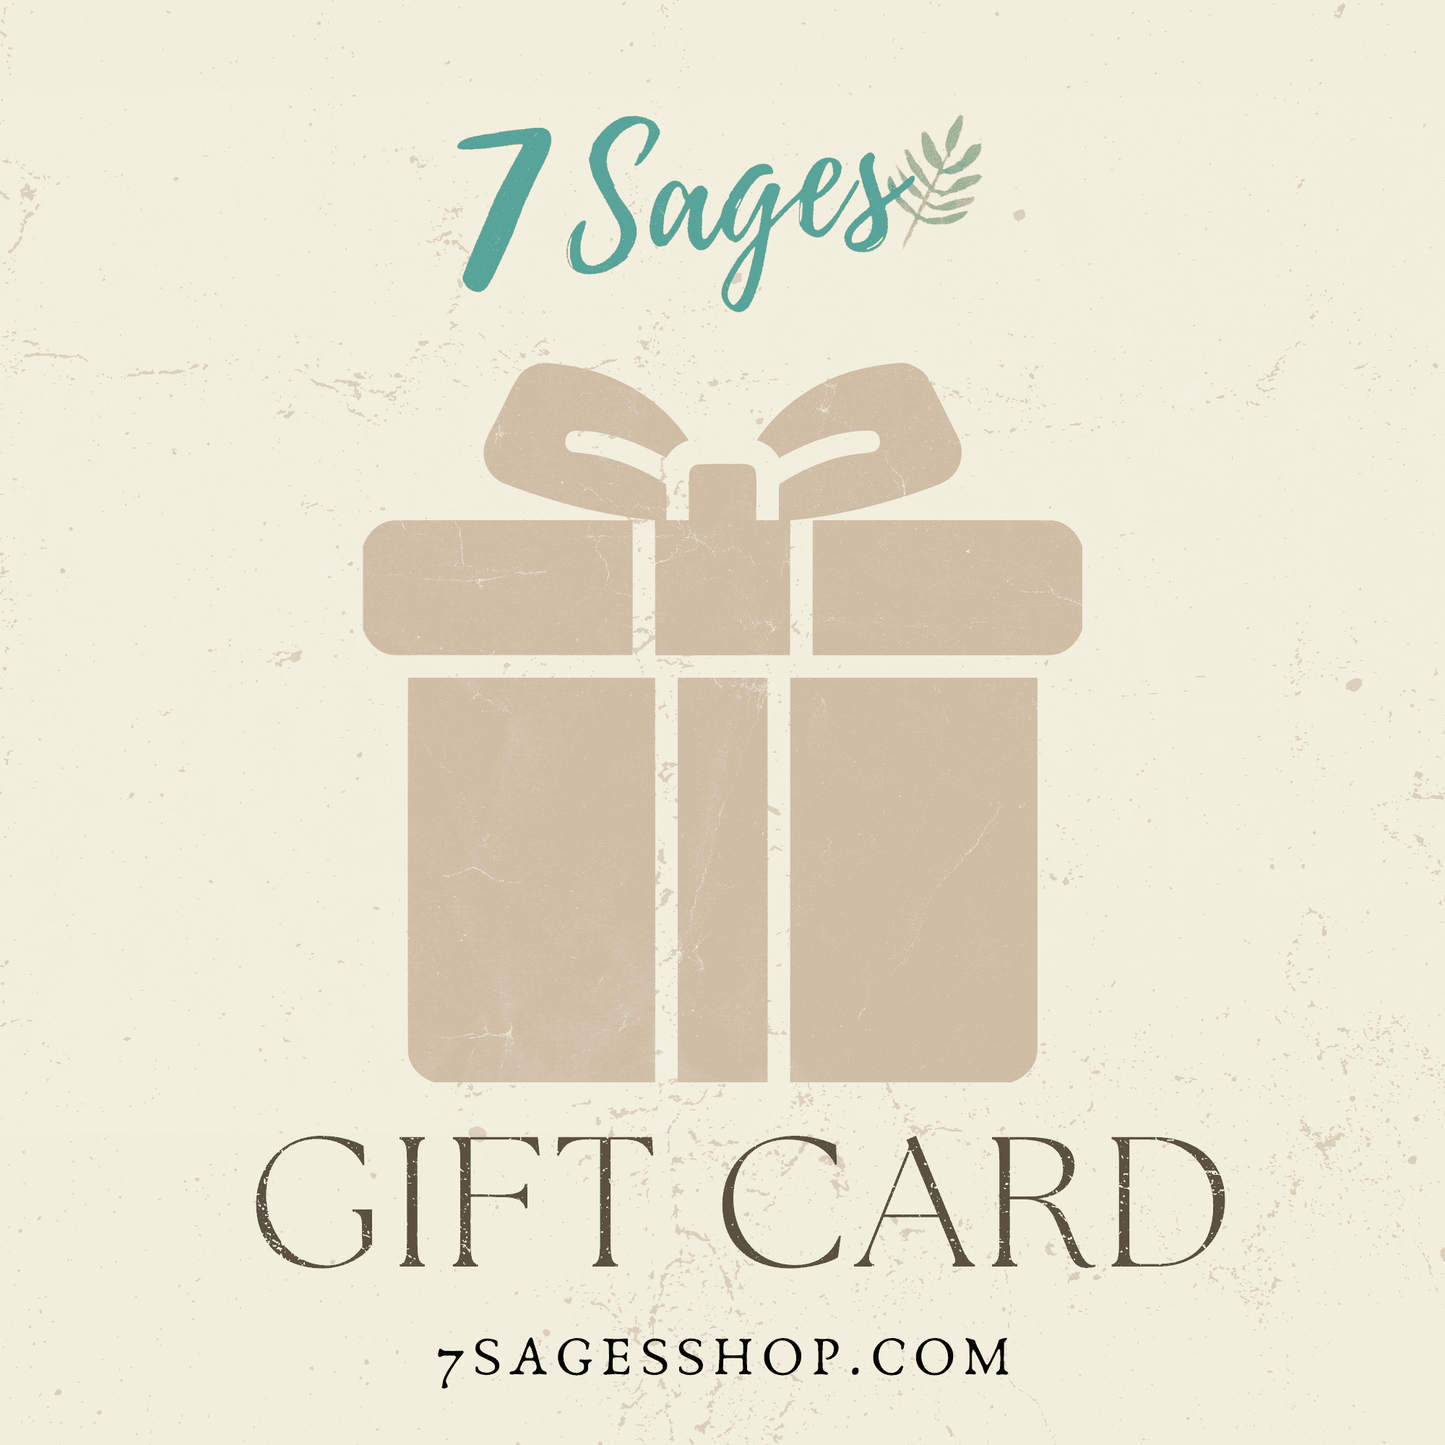 7 Sages Gift Card